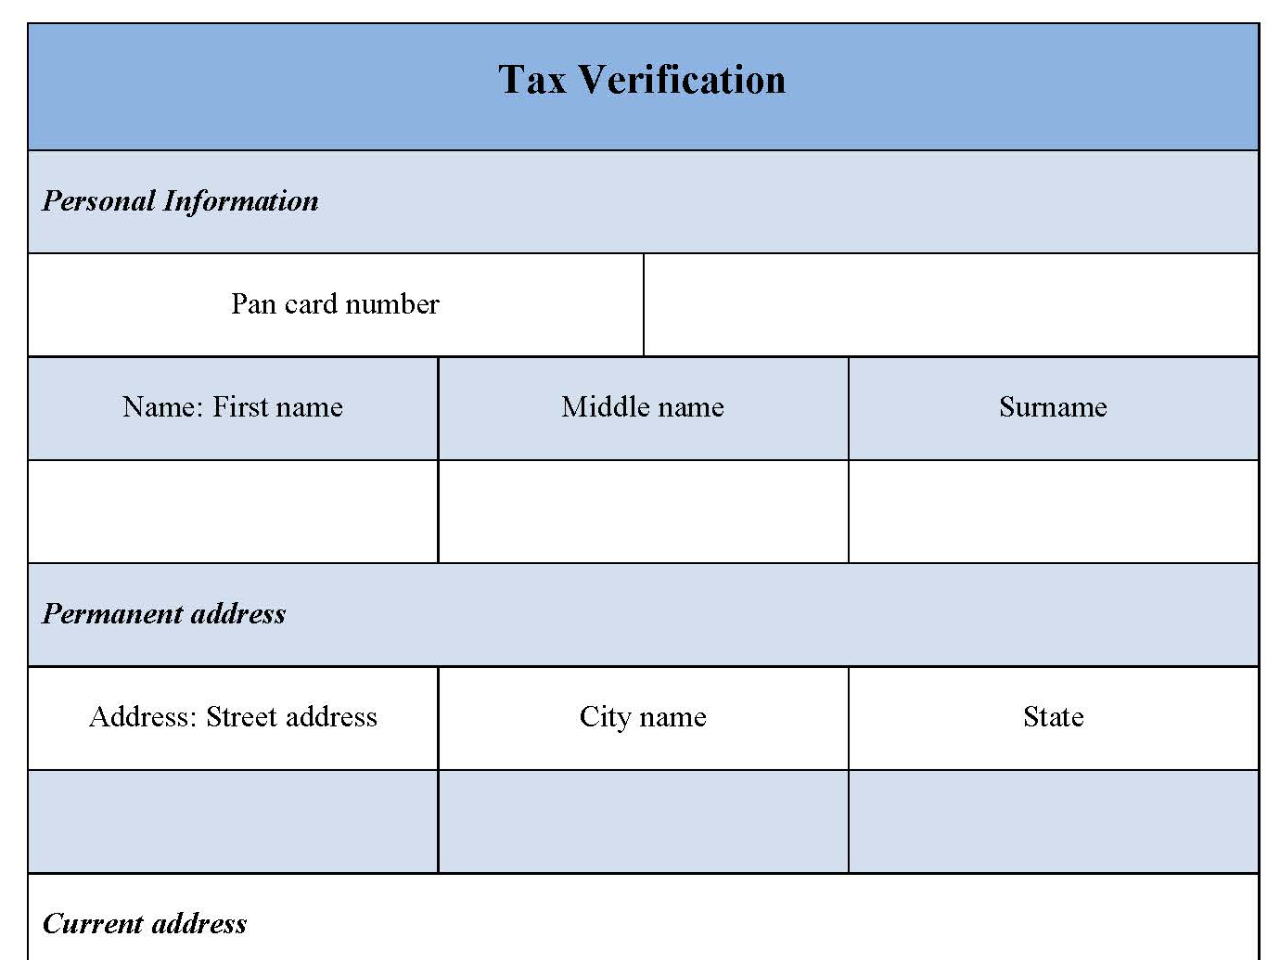 Tax Verification Form